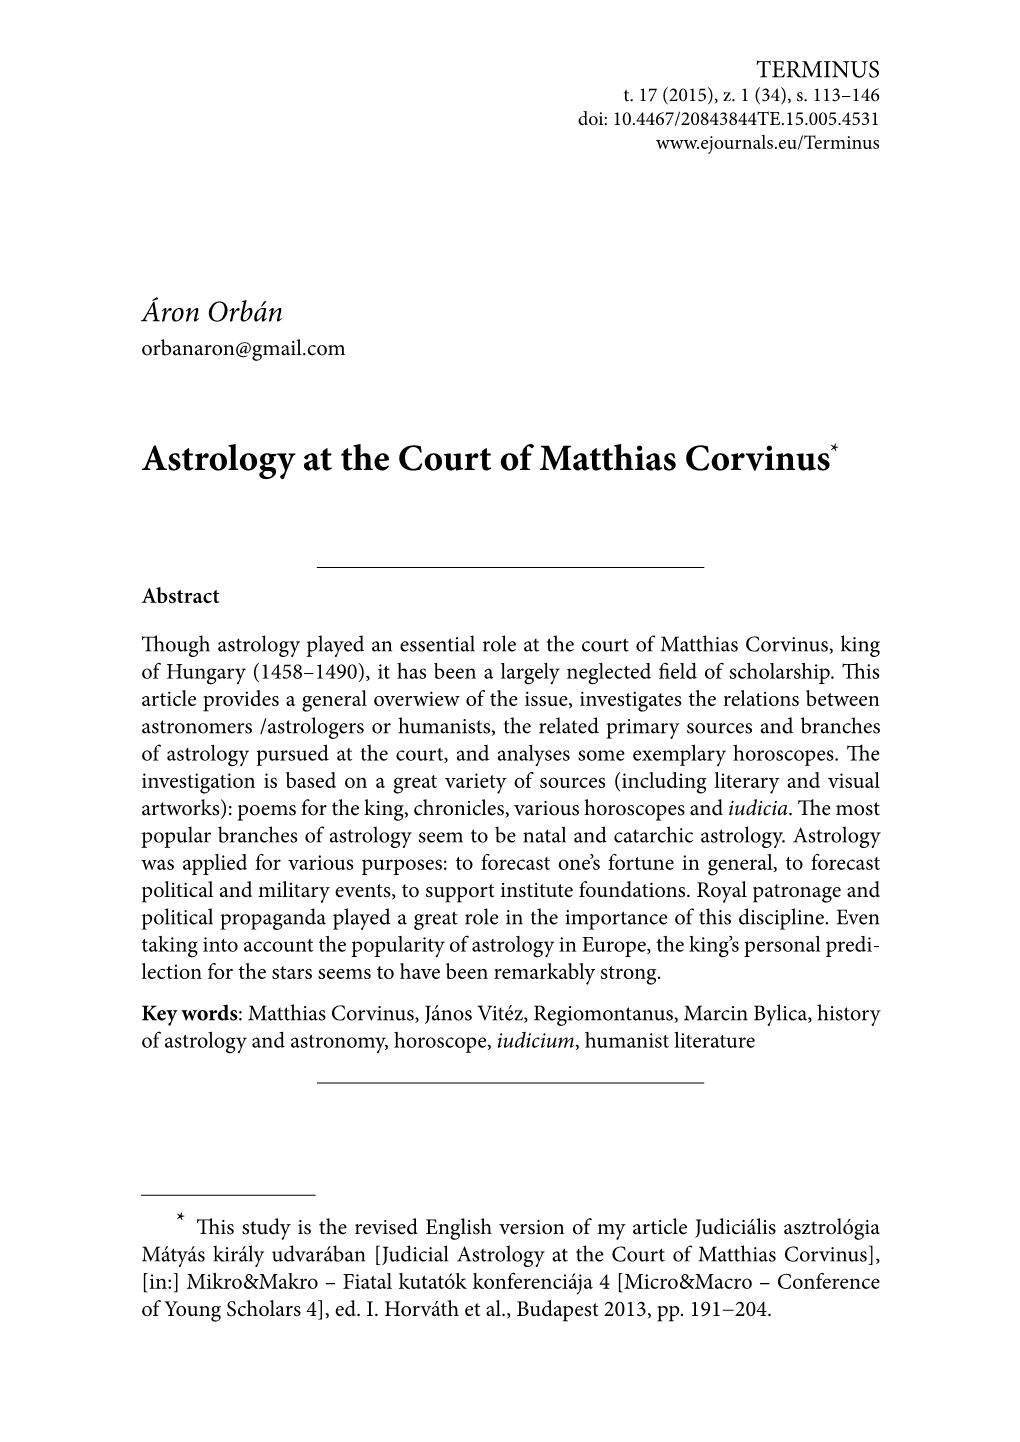 Astrology at the Court of Matthias Corvinus*